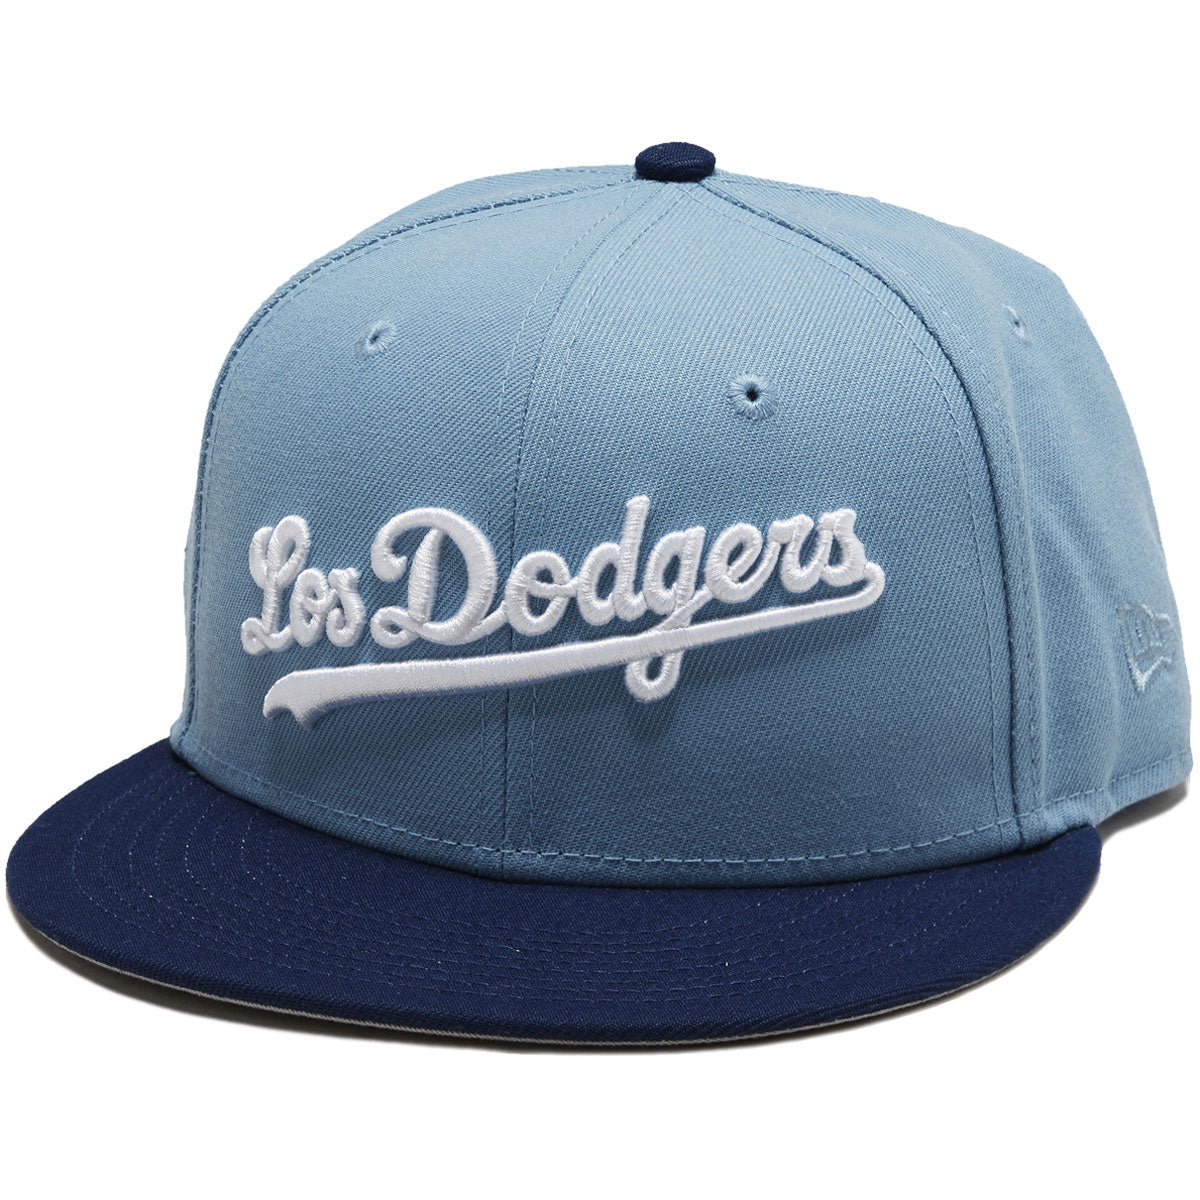 New Era Retro City 17184 Los Dodgers Hat - Light Blue/Blue